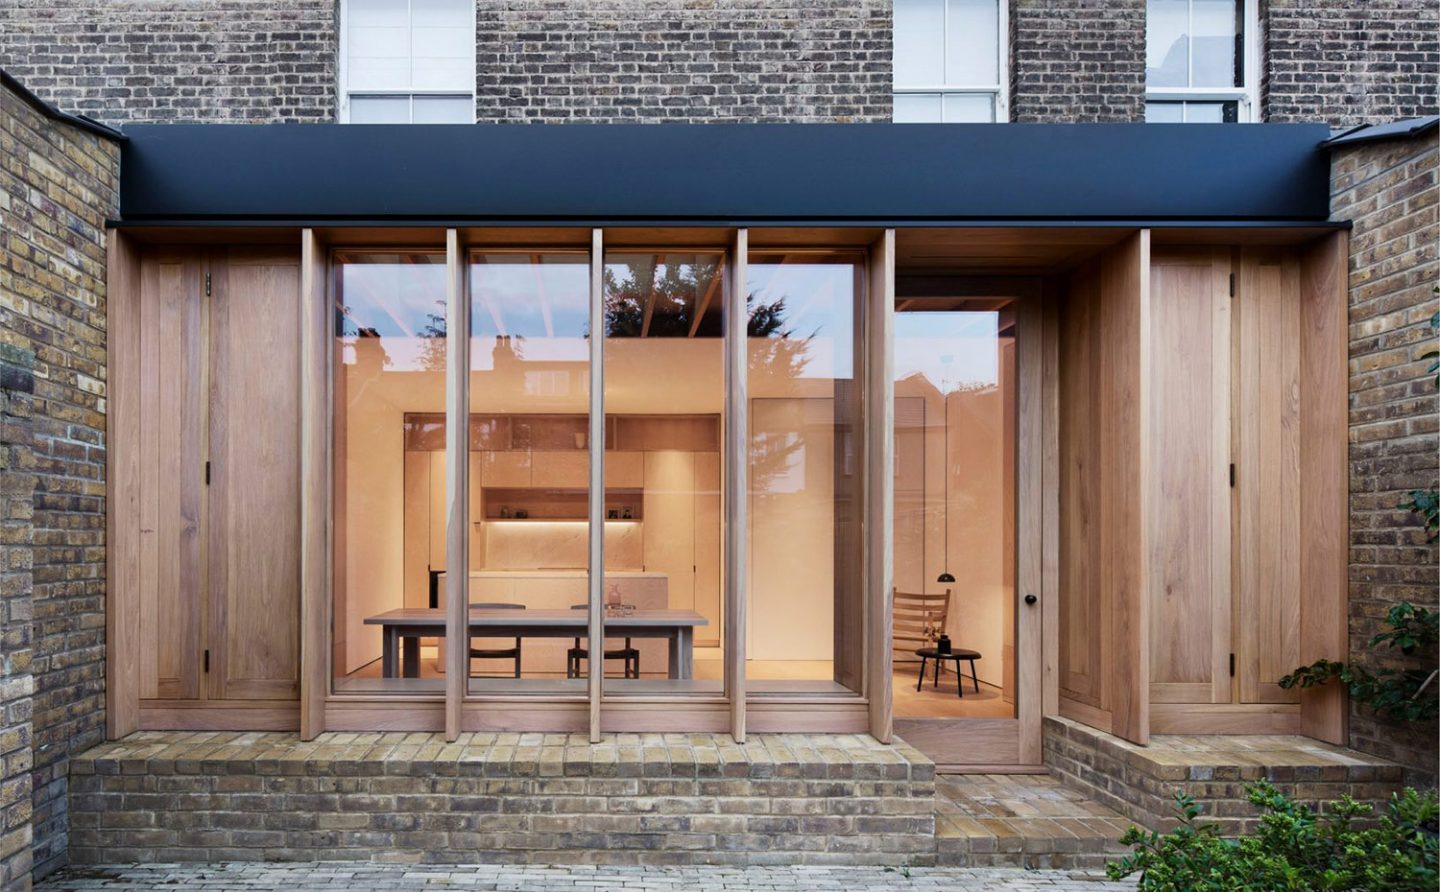 iGNANT-Architecture-O'Sullivan-Skoufoglou-Architects-Extension-London-1